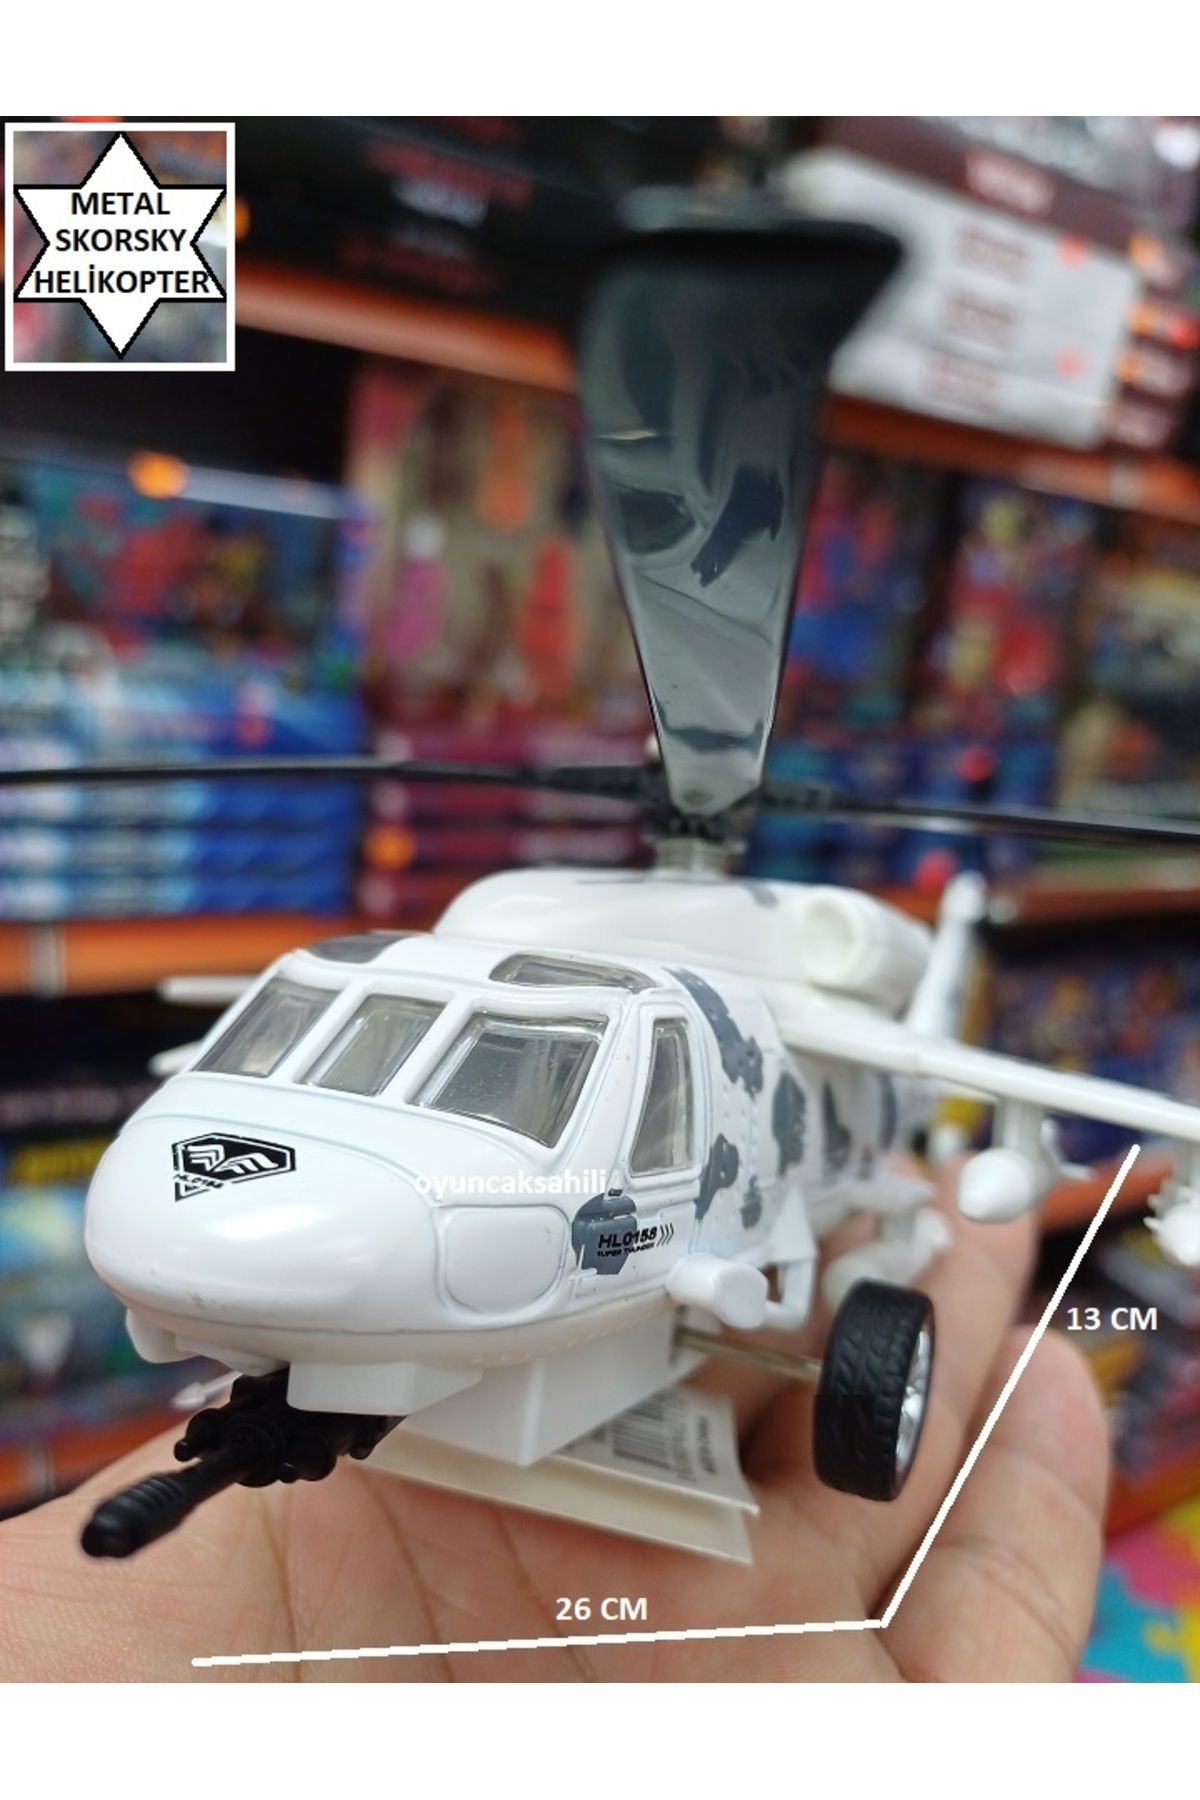 OYUNCAKSAHİLİ Sıkorsky 5.Nesil Savaş Helikopter Metal Amerikan Model Işık Ses Efektli Koleksiyon Skors